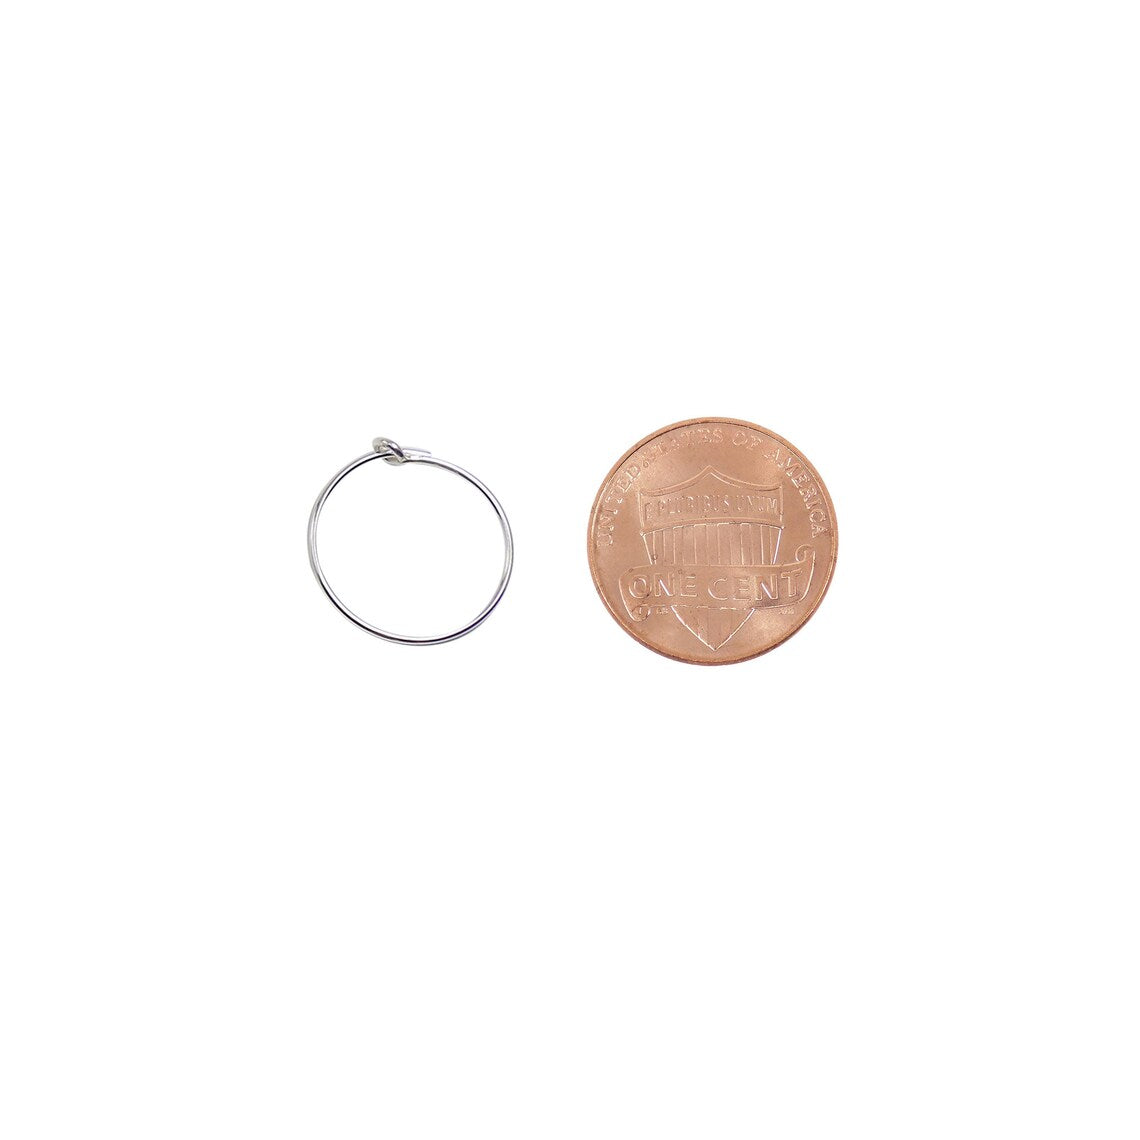 Sterling Silver Wire Beading Hoops Earrings 15mm, 25mm, 30mm, 45mm 22 Gauge/0.7mm, Pair (2 Pcs)